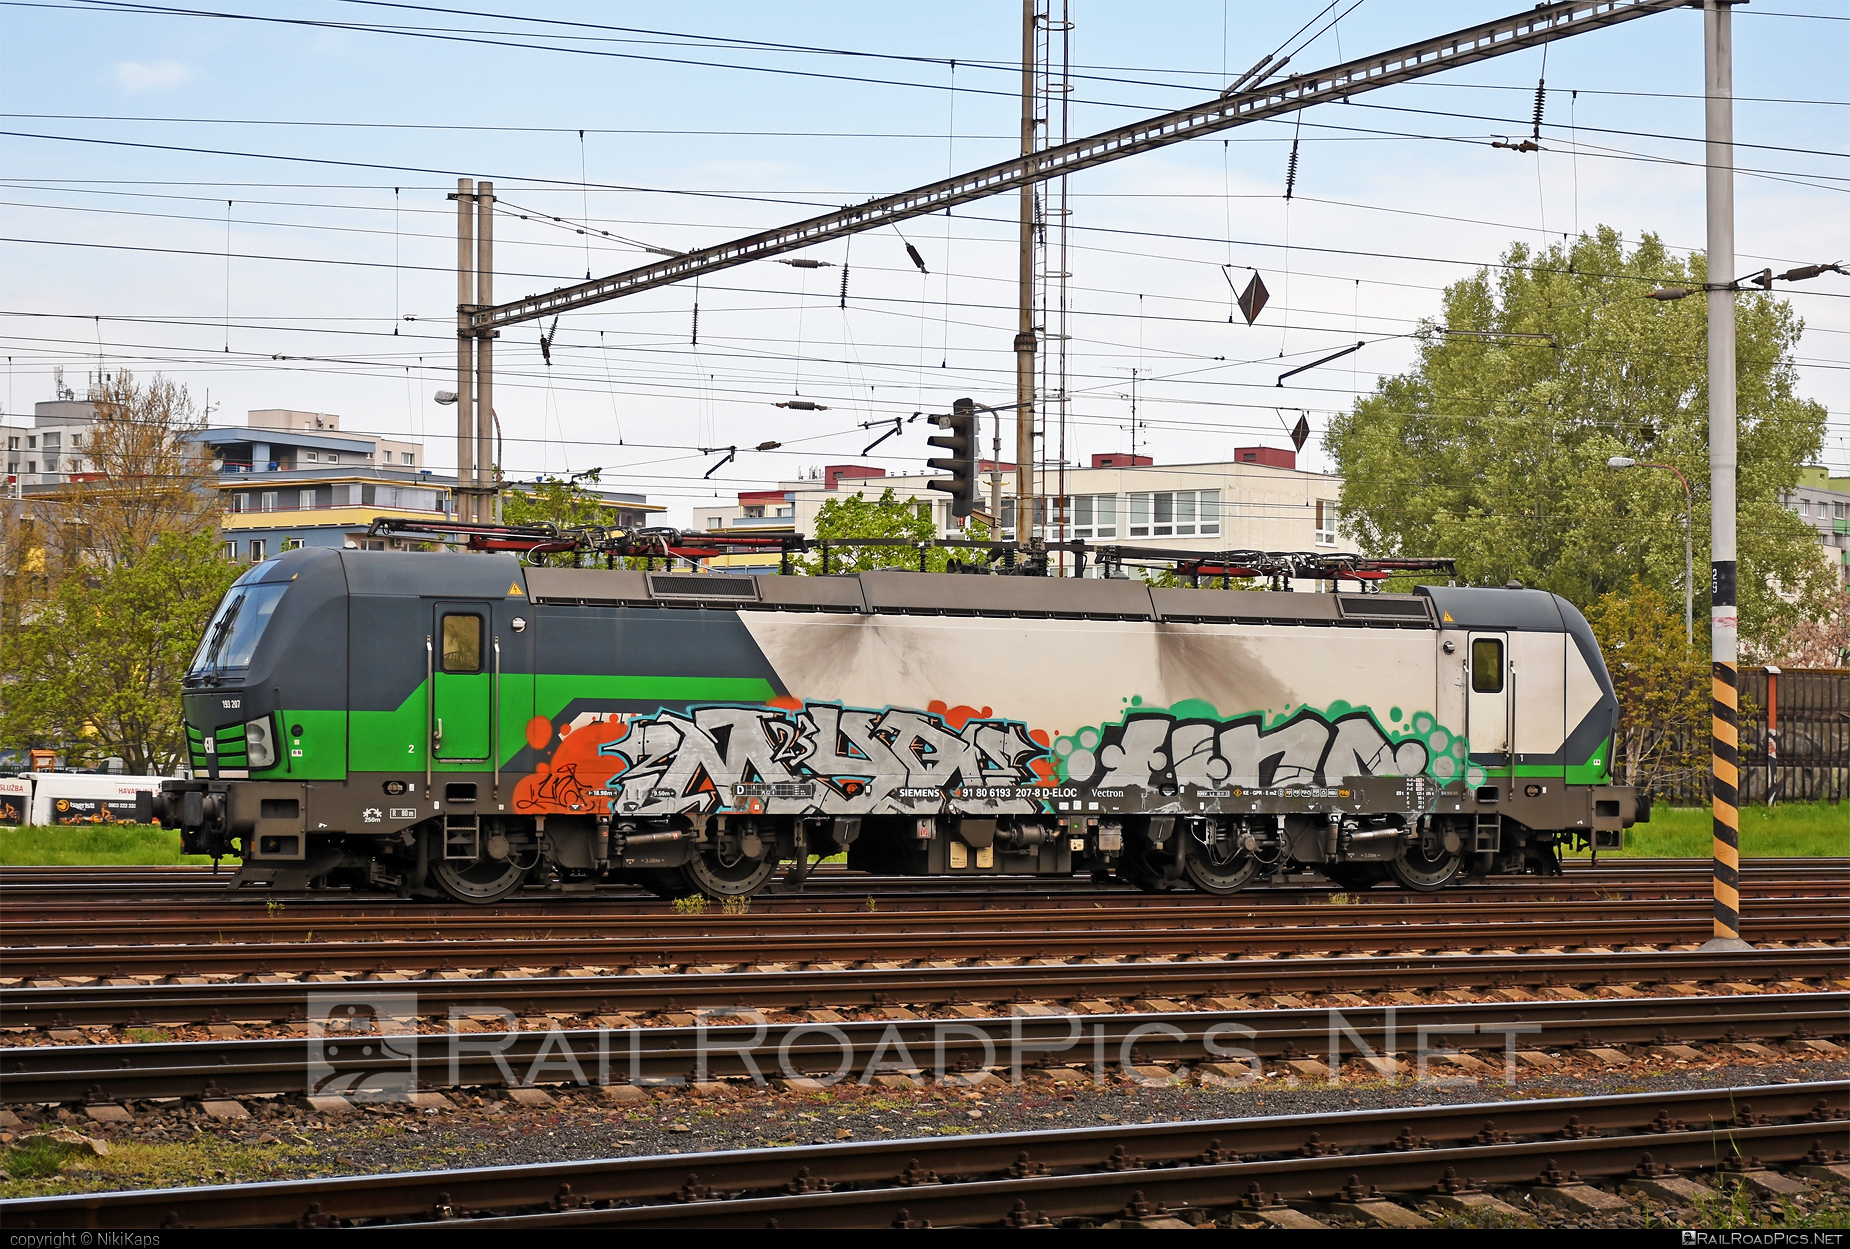 Siemens Vectron MS - 193 207 operated by FRACHTbahn Traktion GmbH #ell #ellgermany #eloc #europeanlocomotiveleasing #frachtbahn #frachtbahntraktion #frachtbahntraktiongmbh #graffiti #siemens #siemensVectron #siemensVectronMS #vectron #vectronMS